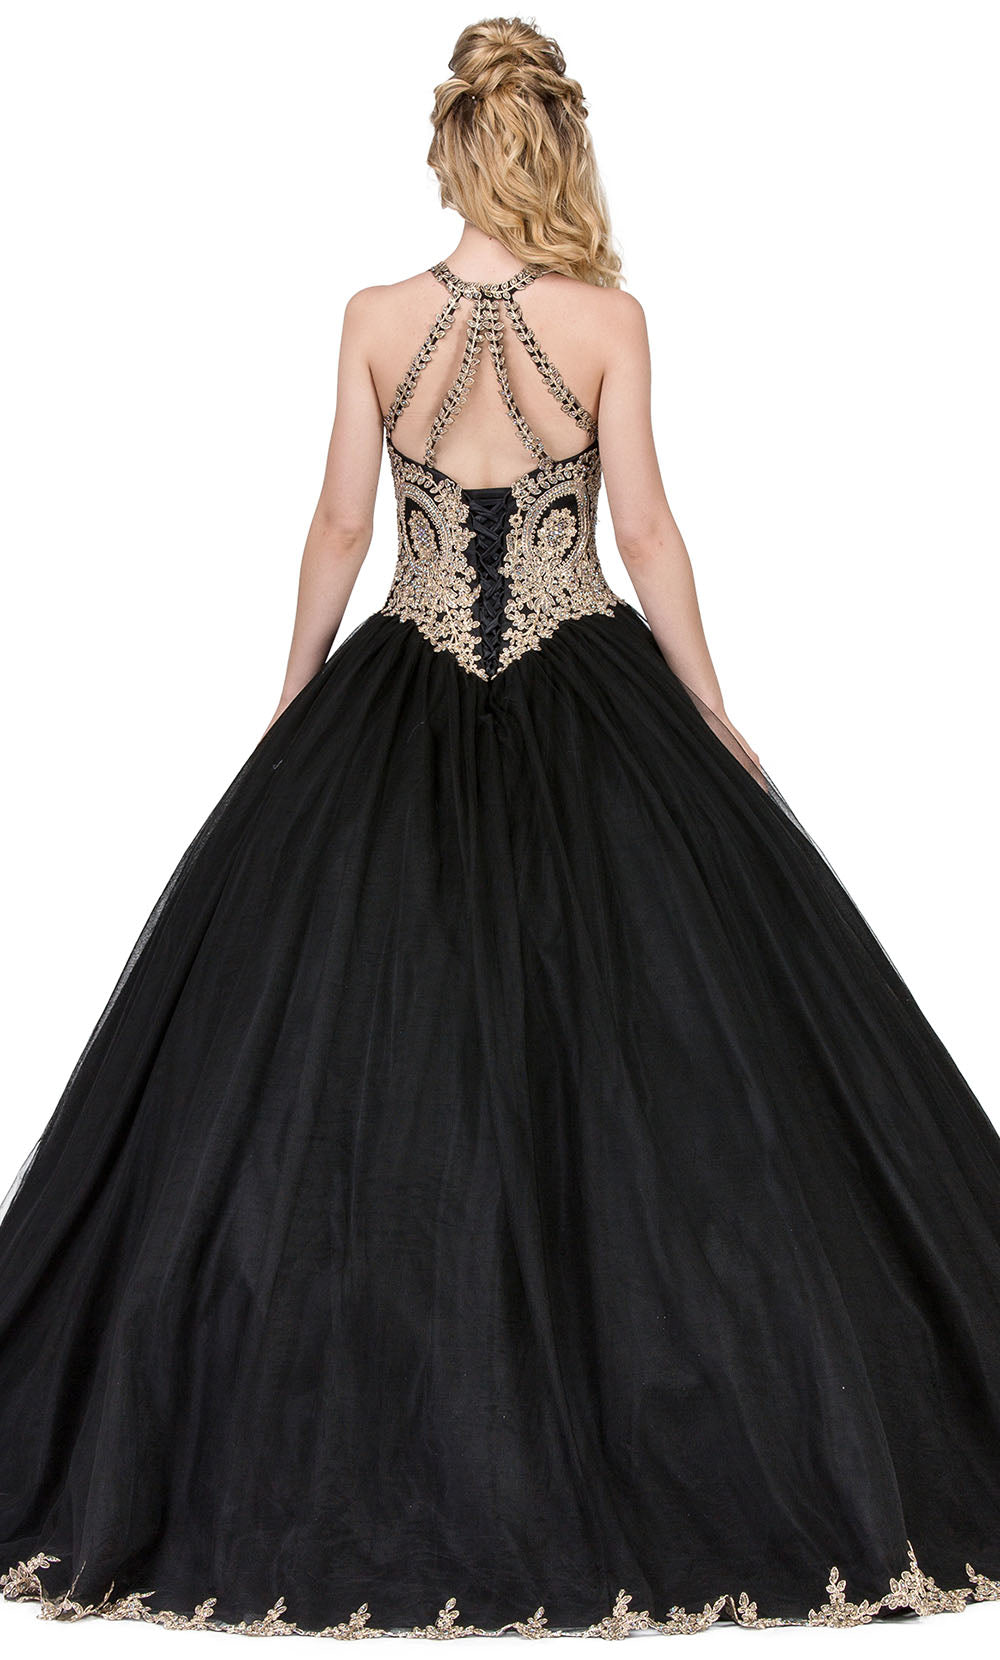 Dancing Queen - 1326 Embroidered Halter Neck Ballgown In Black